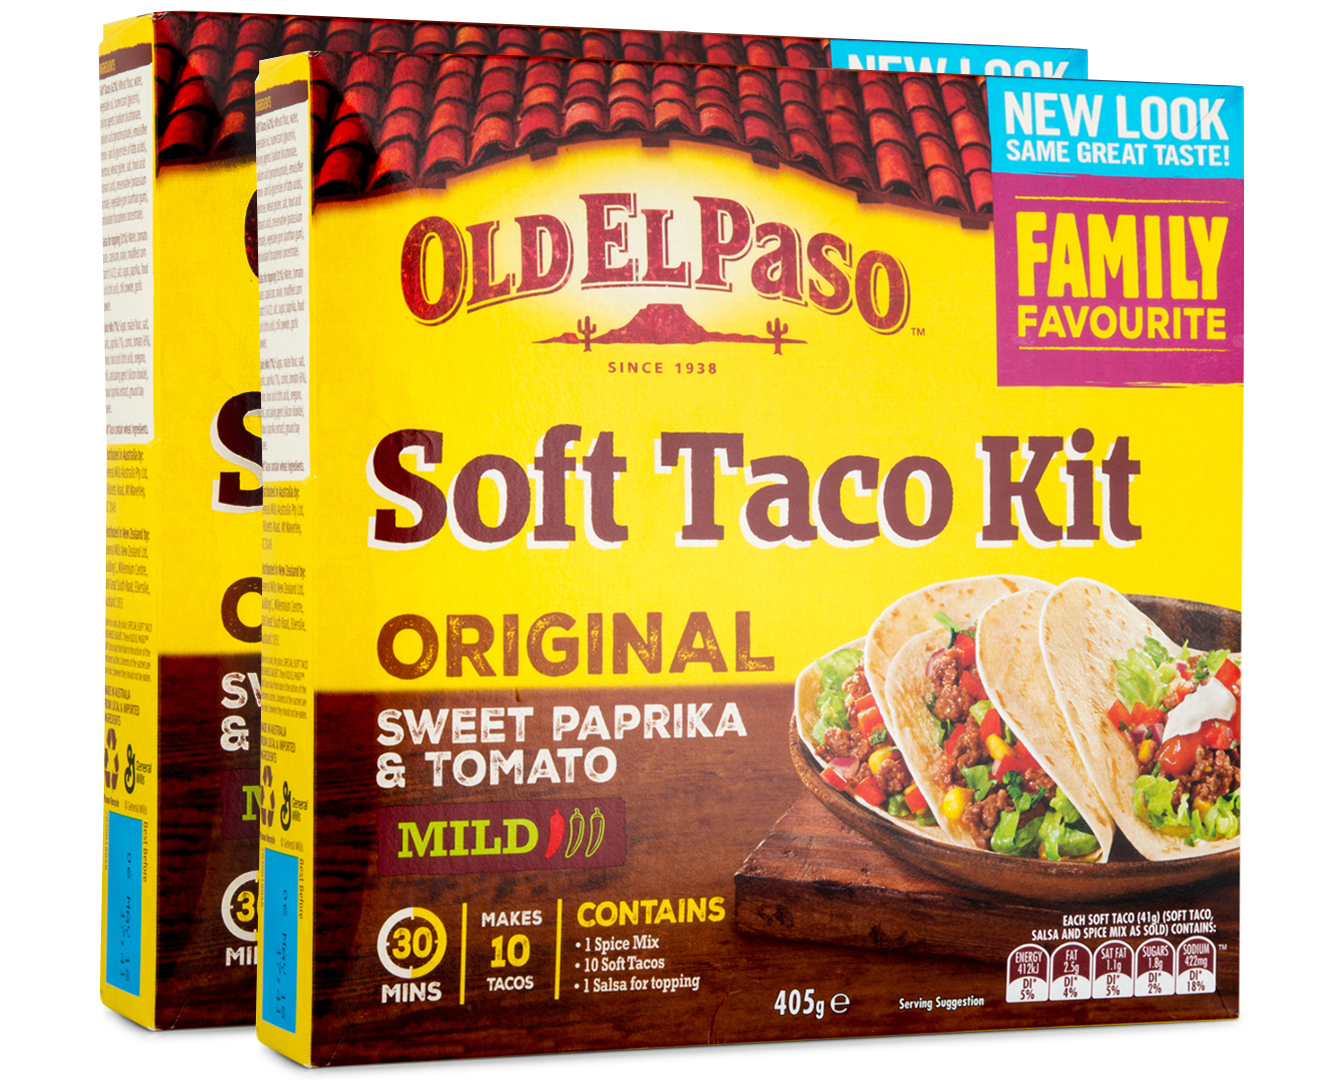 Old El Paso Soft Taco Kit Instructions 4268